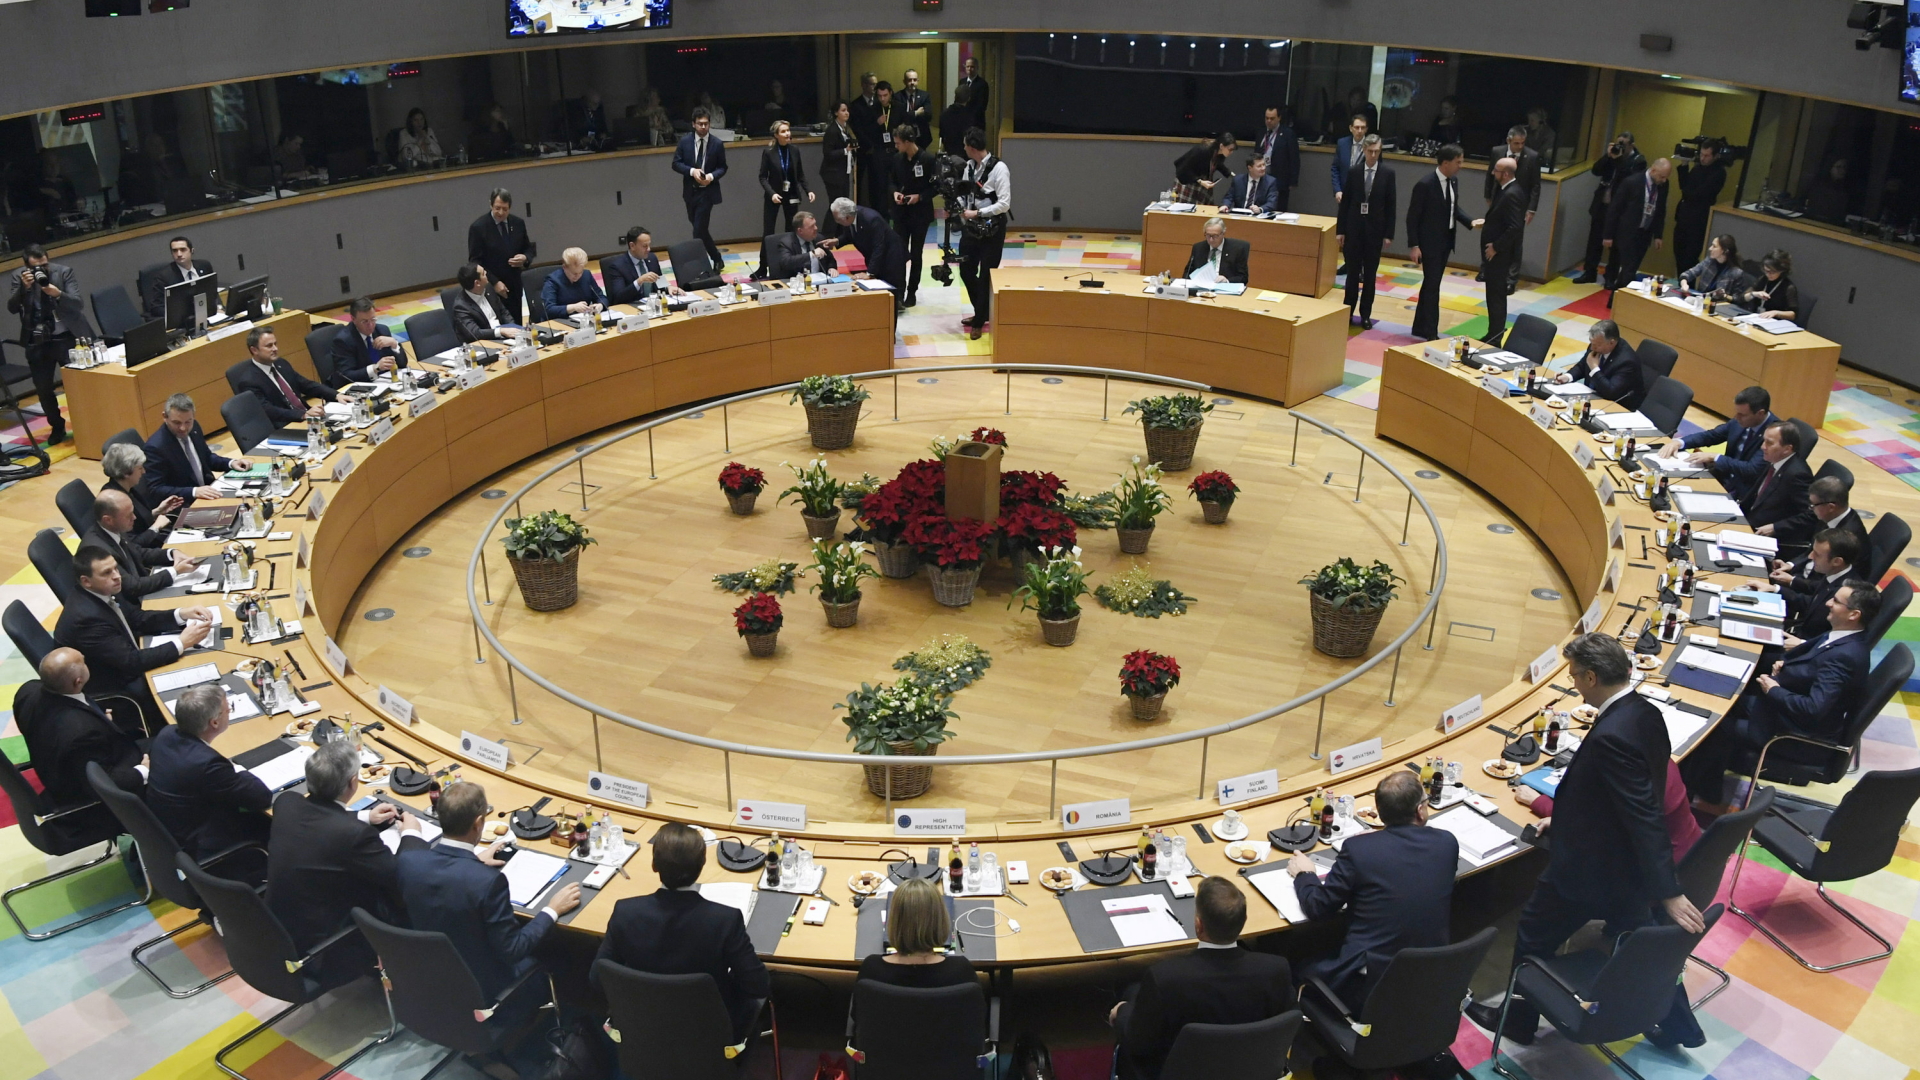 Teilnehmer des EU-Gipfels in Brüssel | dpa